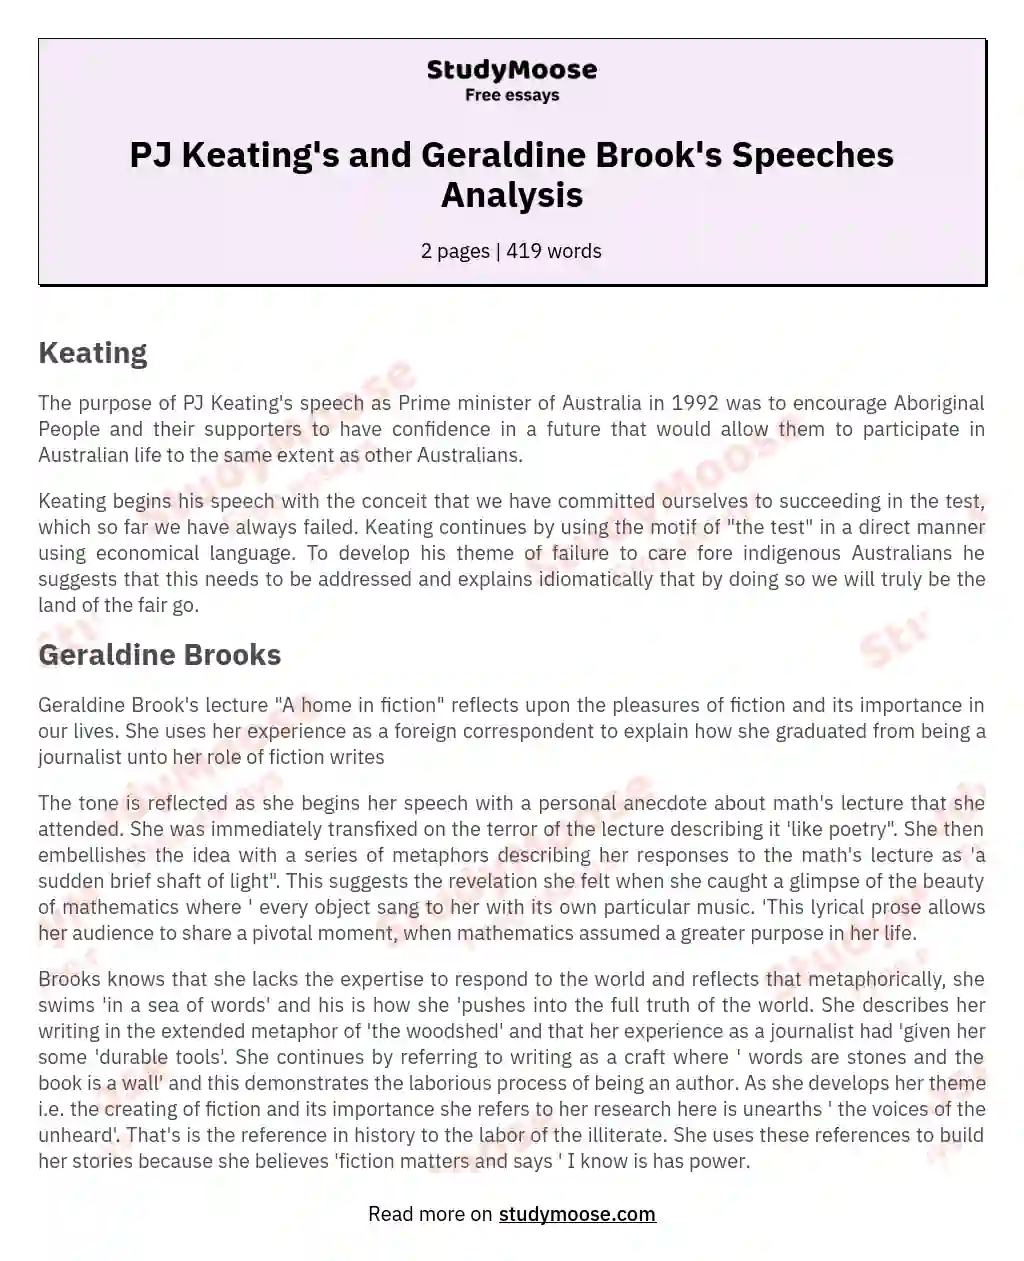 PJ Keating's and Geraldine Brook's Speeches Analysis essay